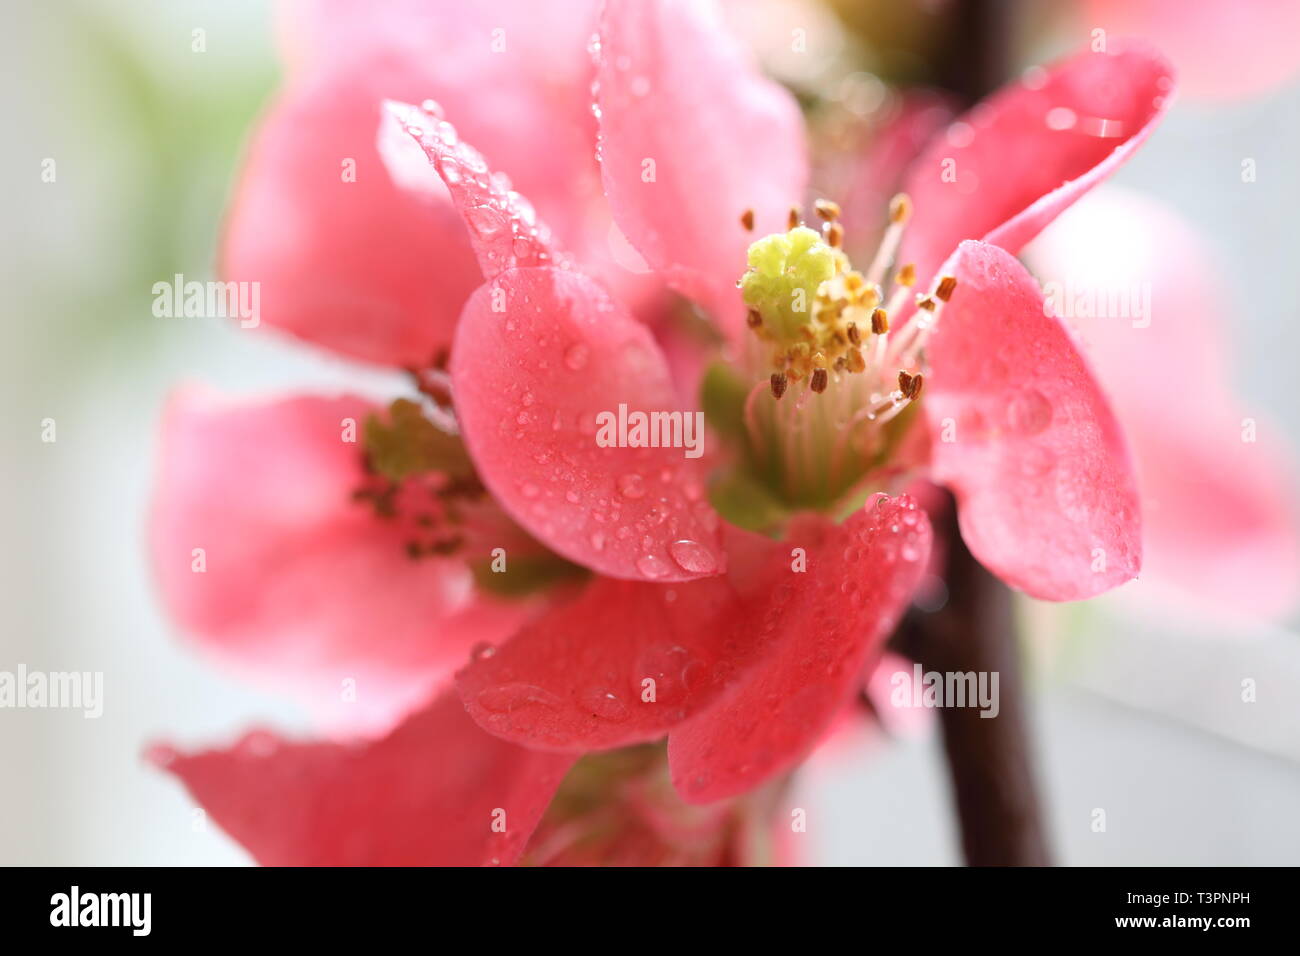 Ornamental quince, Chinese Flowering Quince (Chaenomeles speciosa 'Umbilicata', Chaenomeles speciosa Umbilicata), cultivar Umbilicata Stock Photo